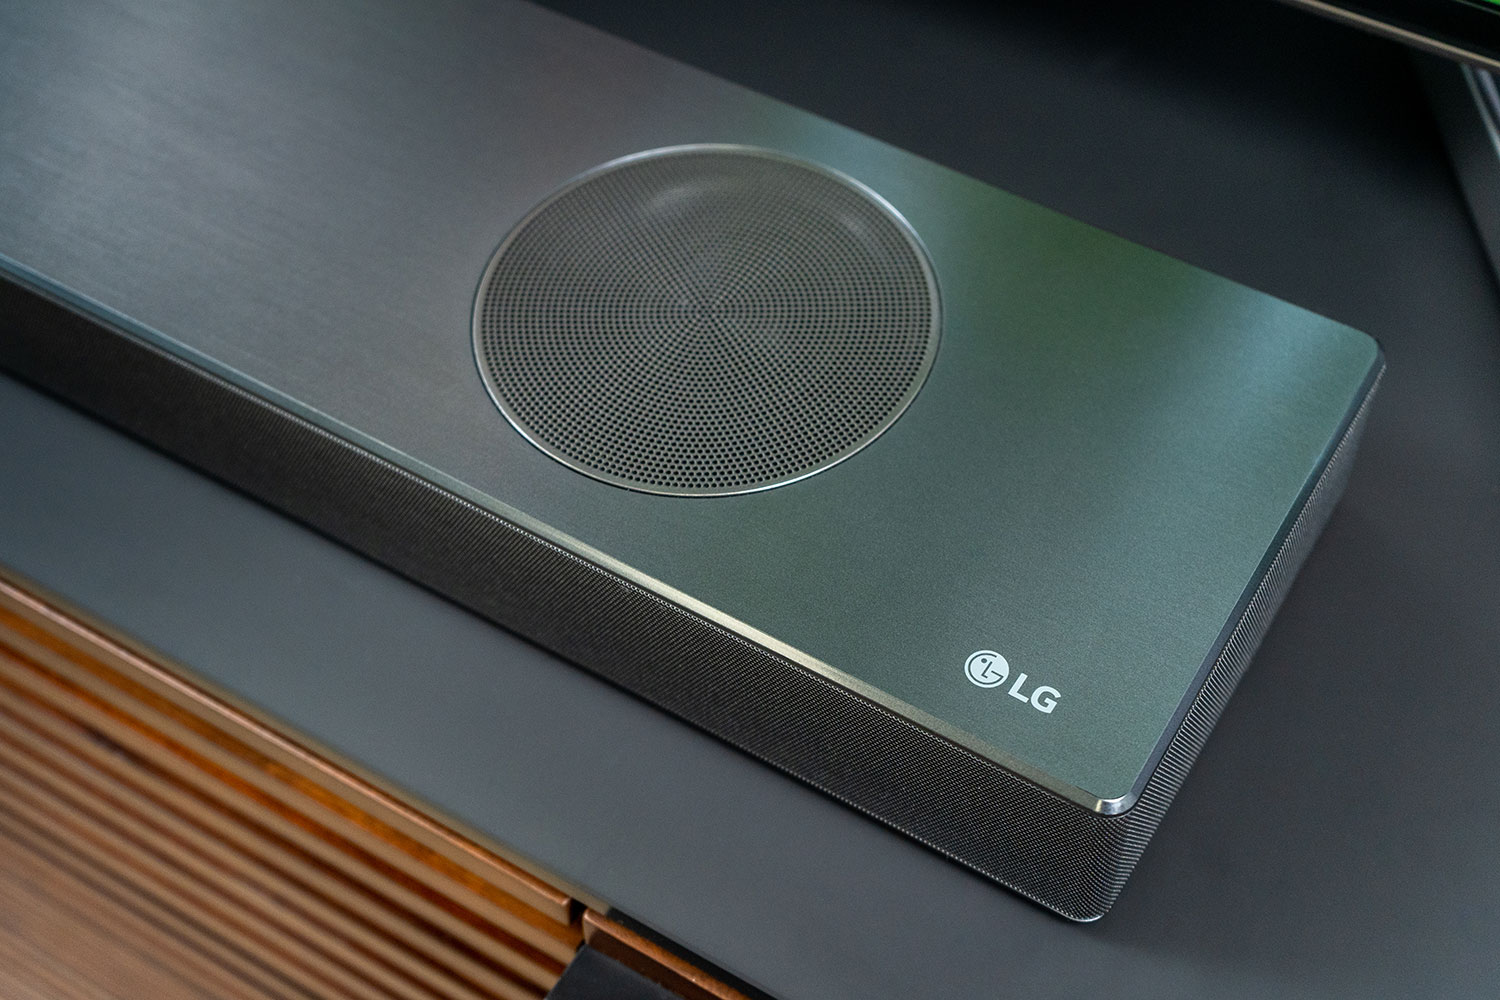 Should you buy an LG soundbar?